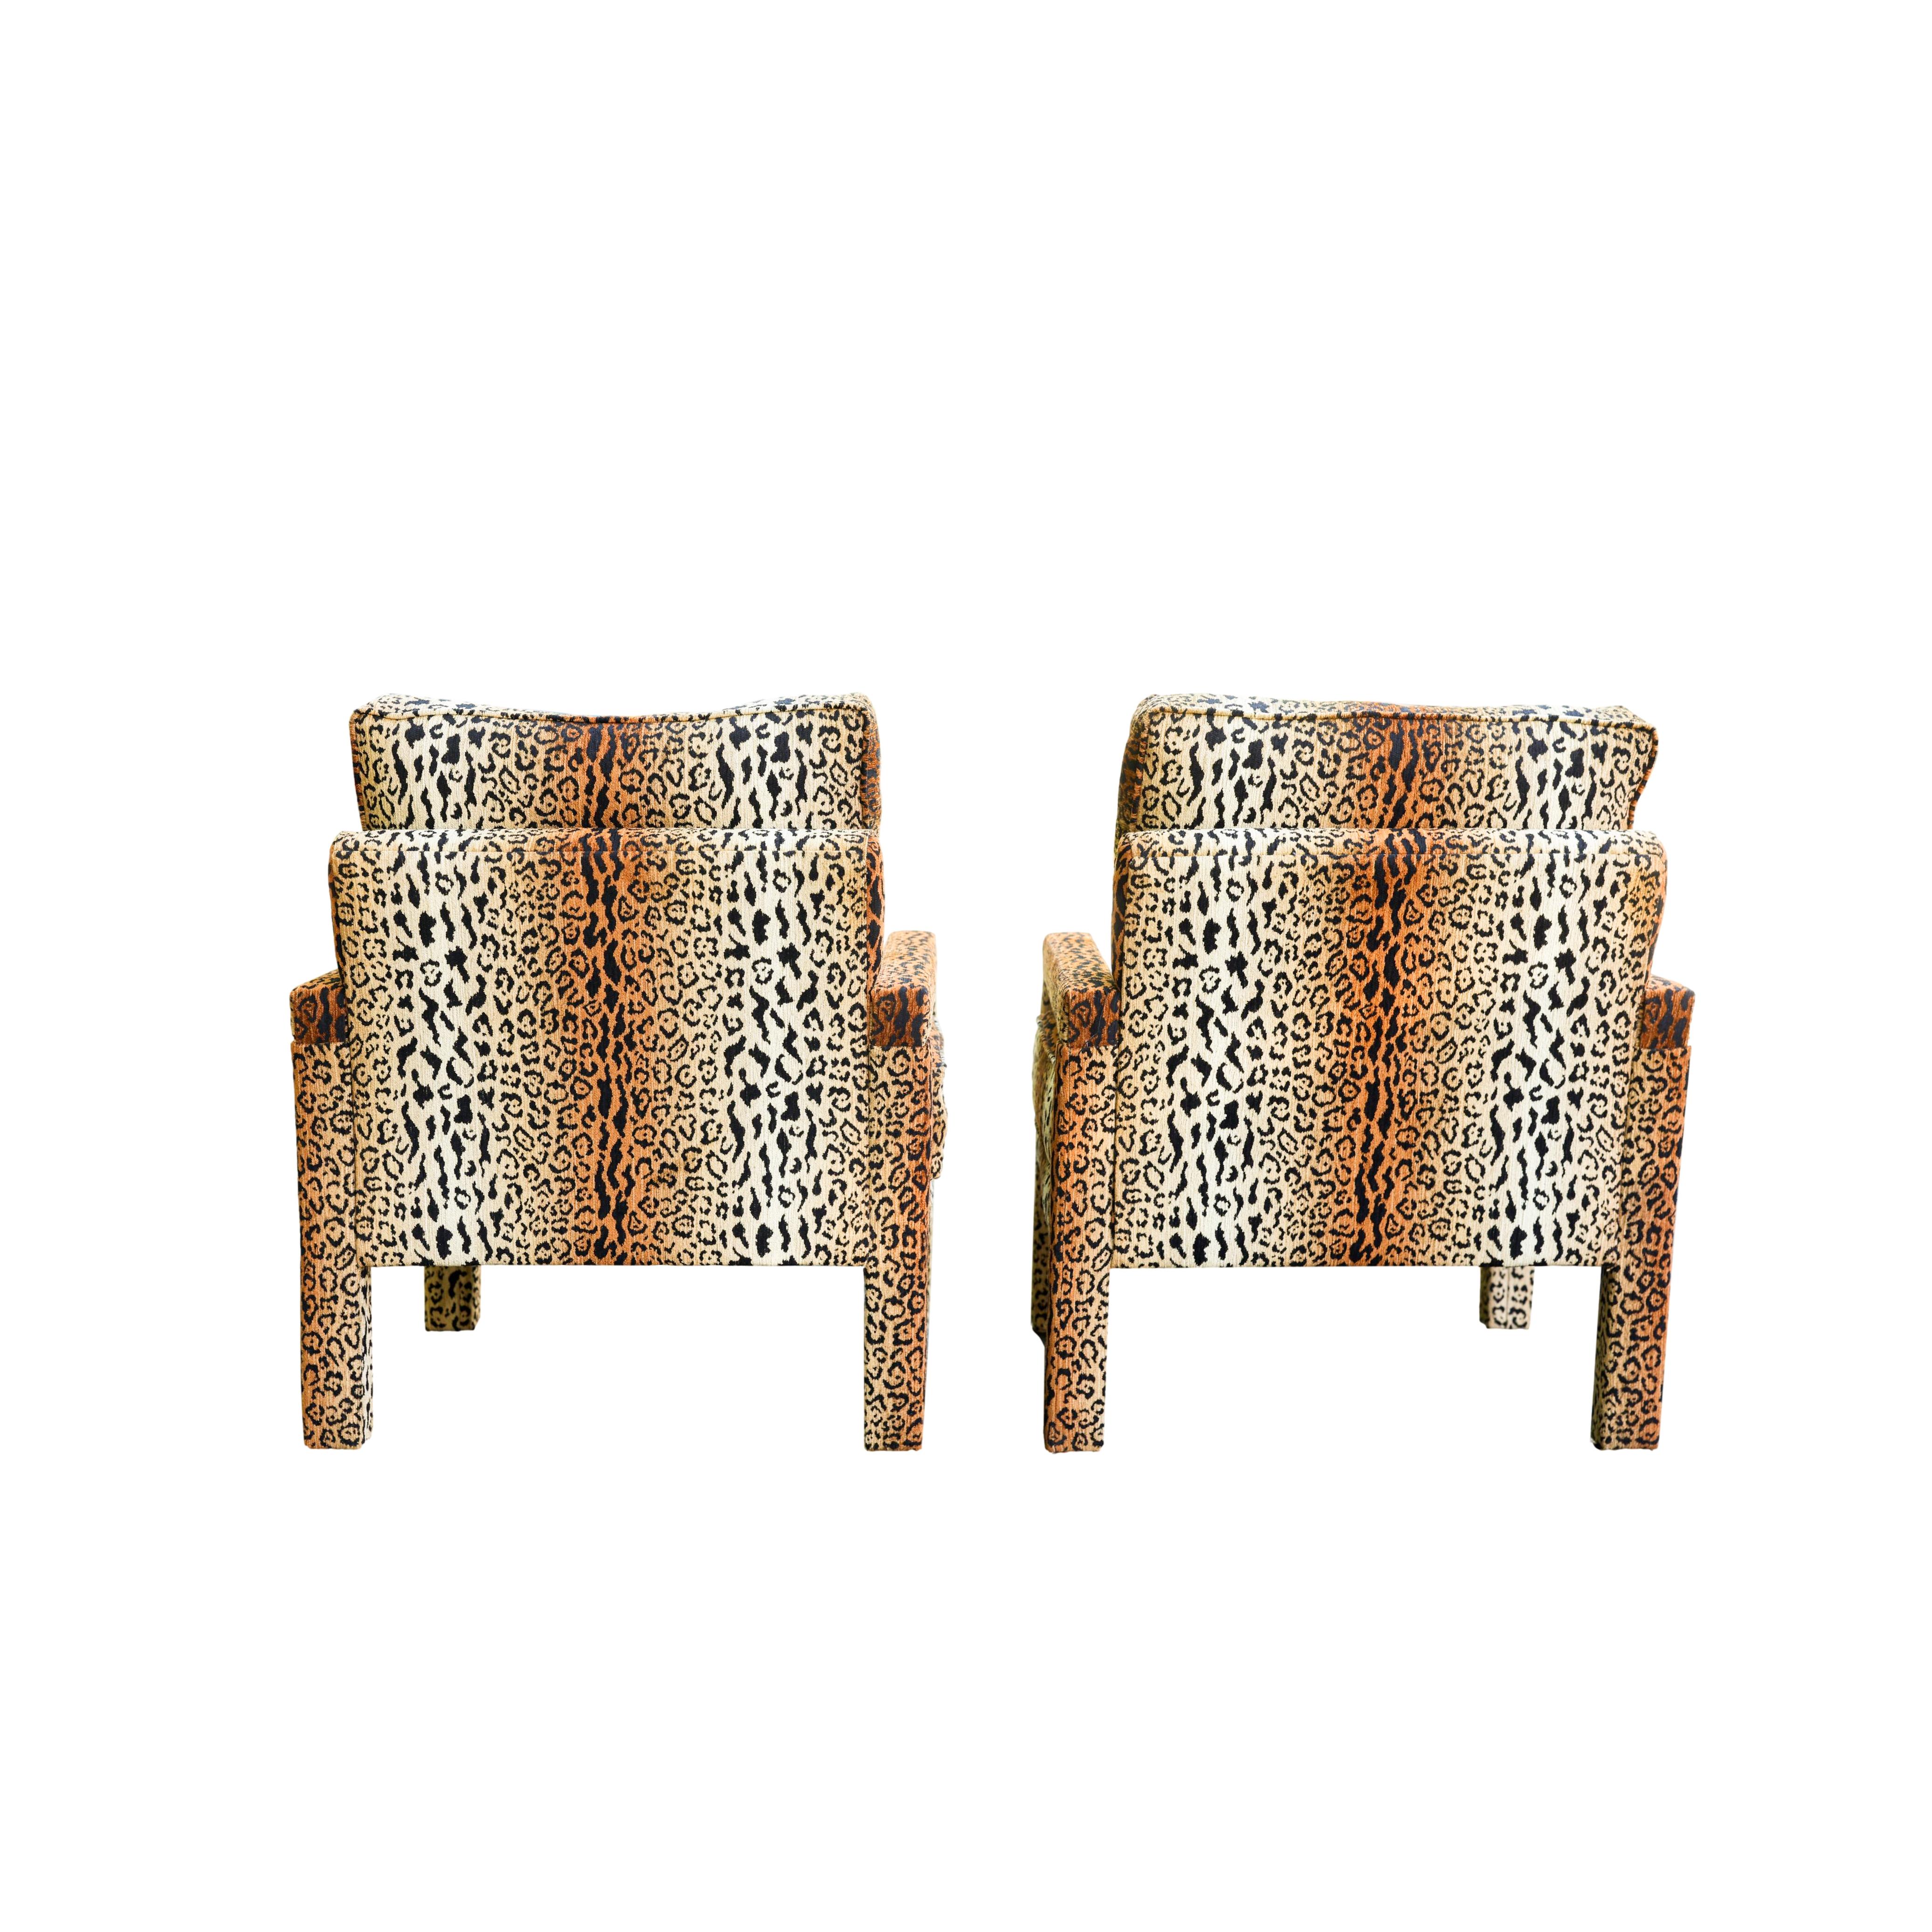 American Pair of New Milo Baughman-Style Parsons Chairs in Designer Cheetah Velvet